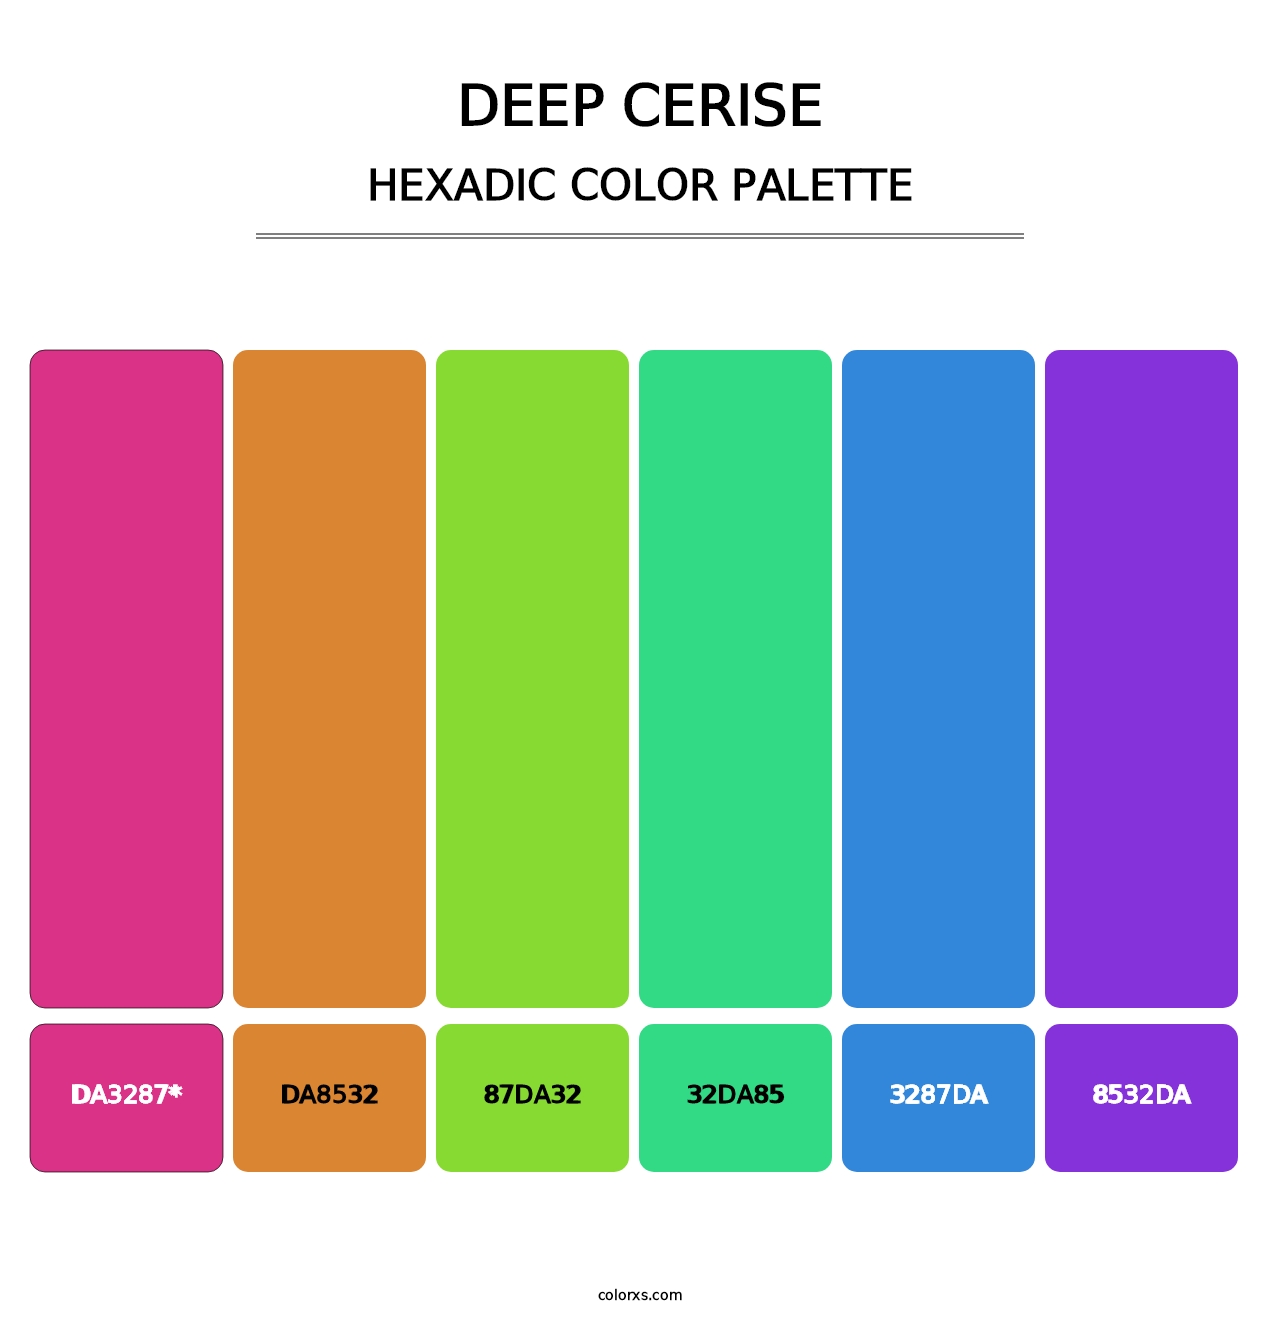 Deep Cerise - Hexadic Color Palette